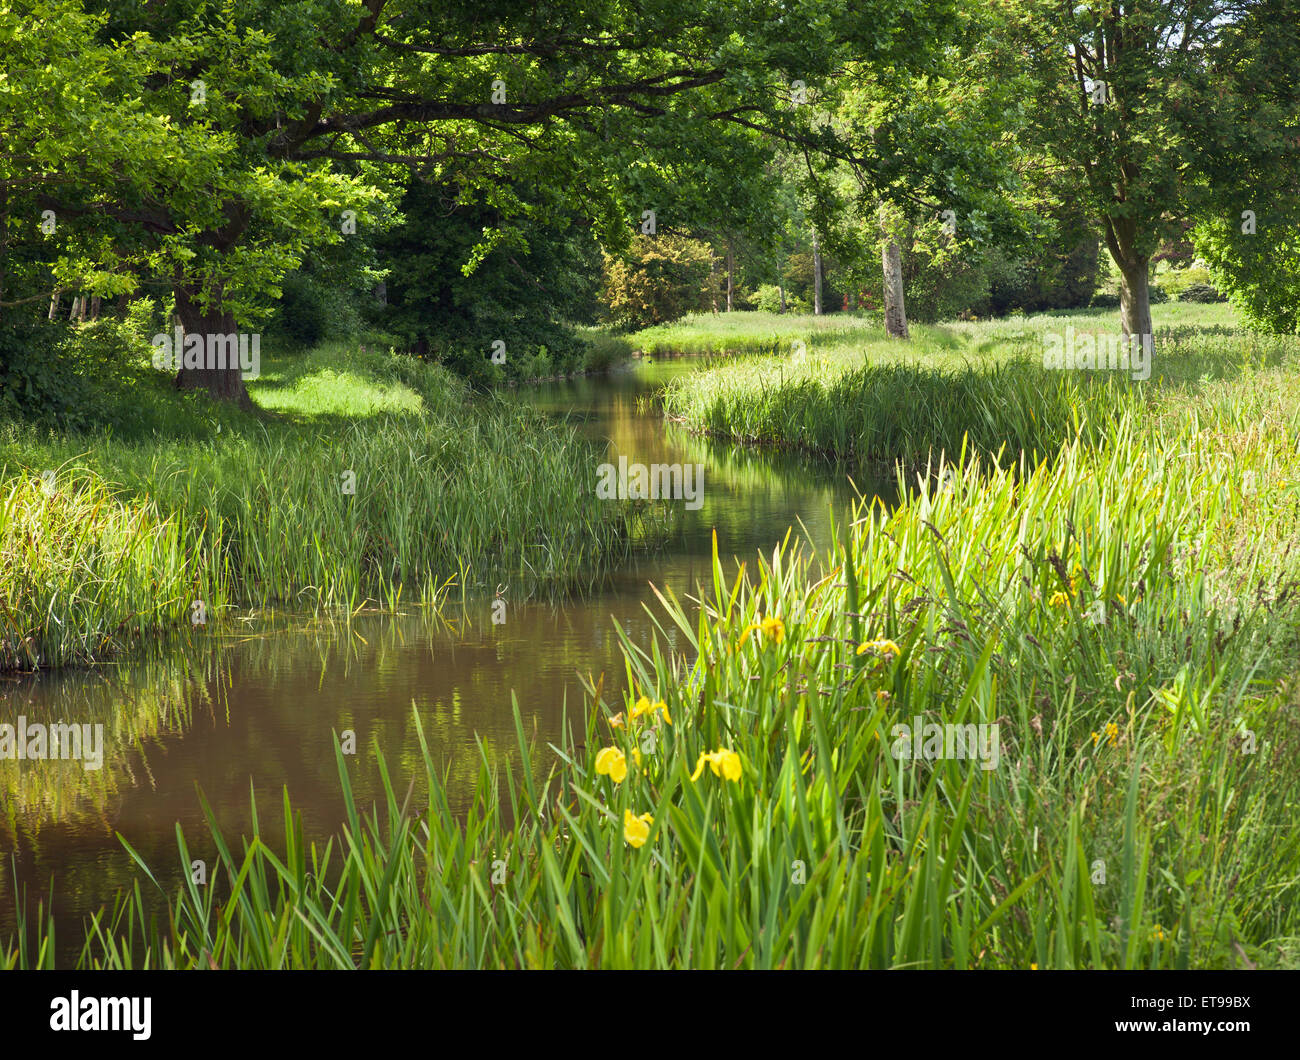 The Serpentine canal, a trademark feature of landscape designer Capability Brown. Gatton Park, Reigate, Surrey. Stock Photo